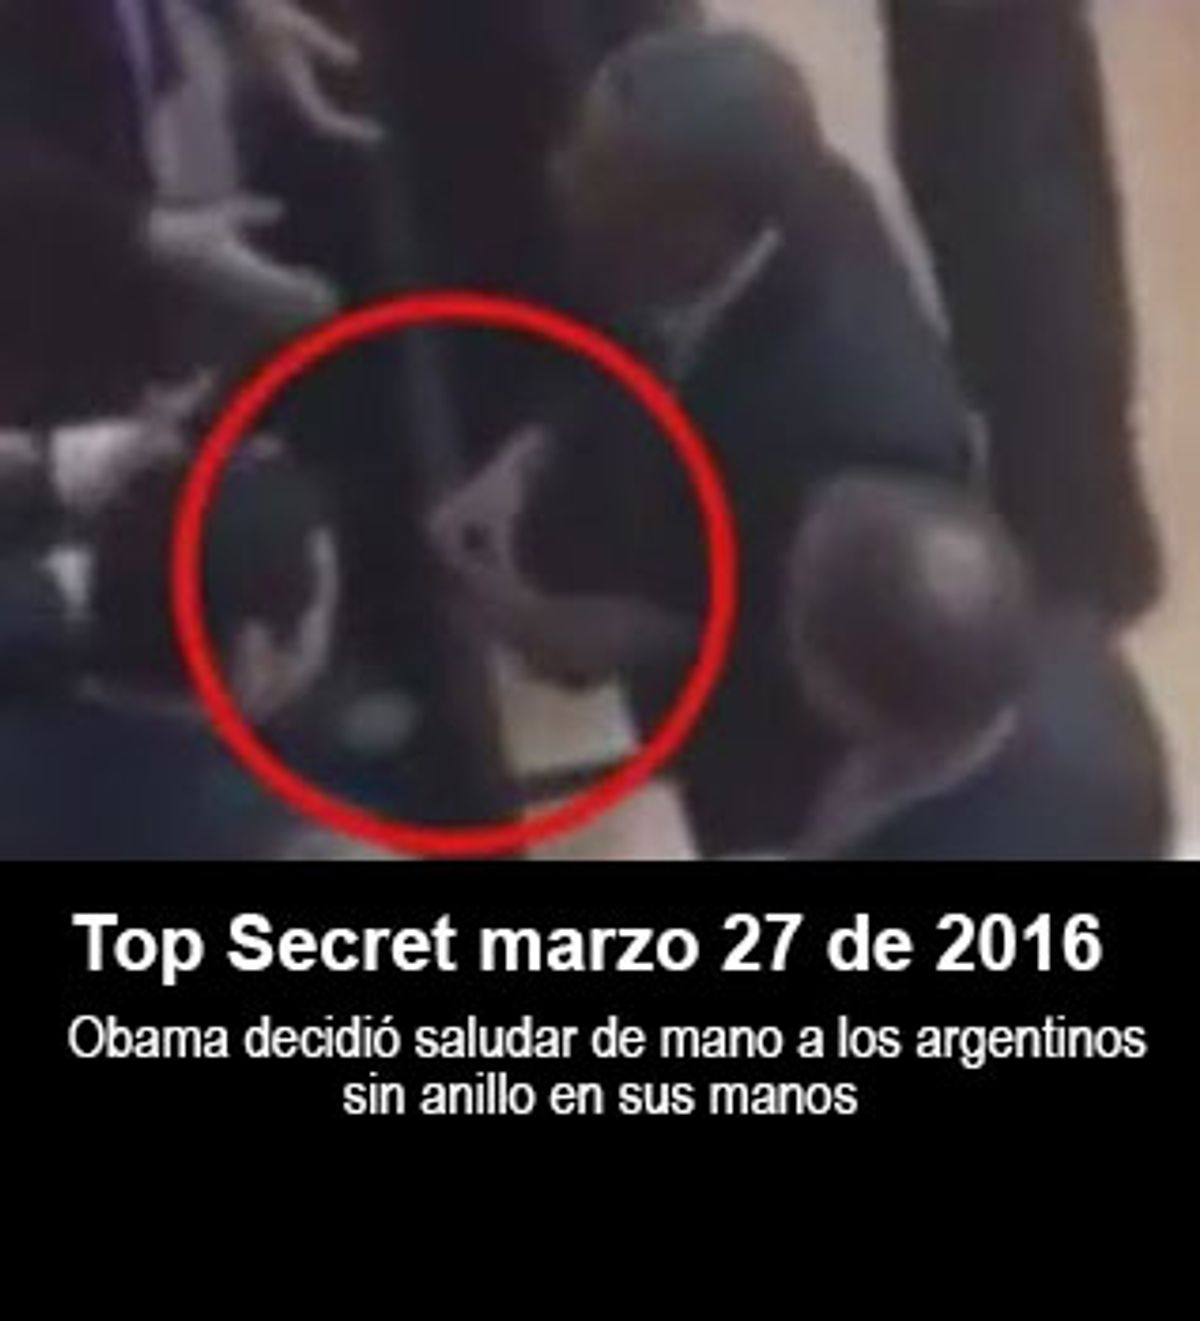 Top secret marzo 27 de 2016